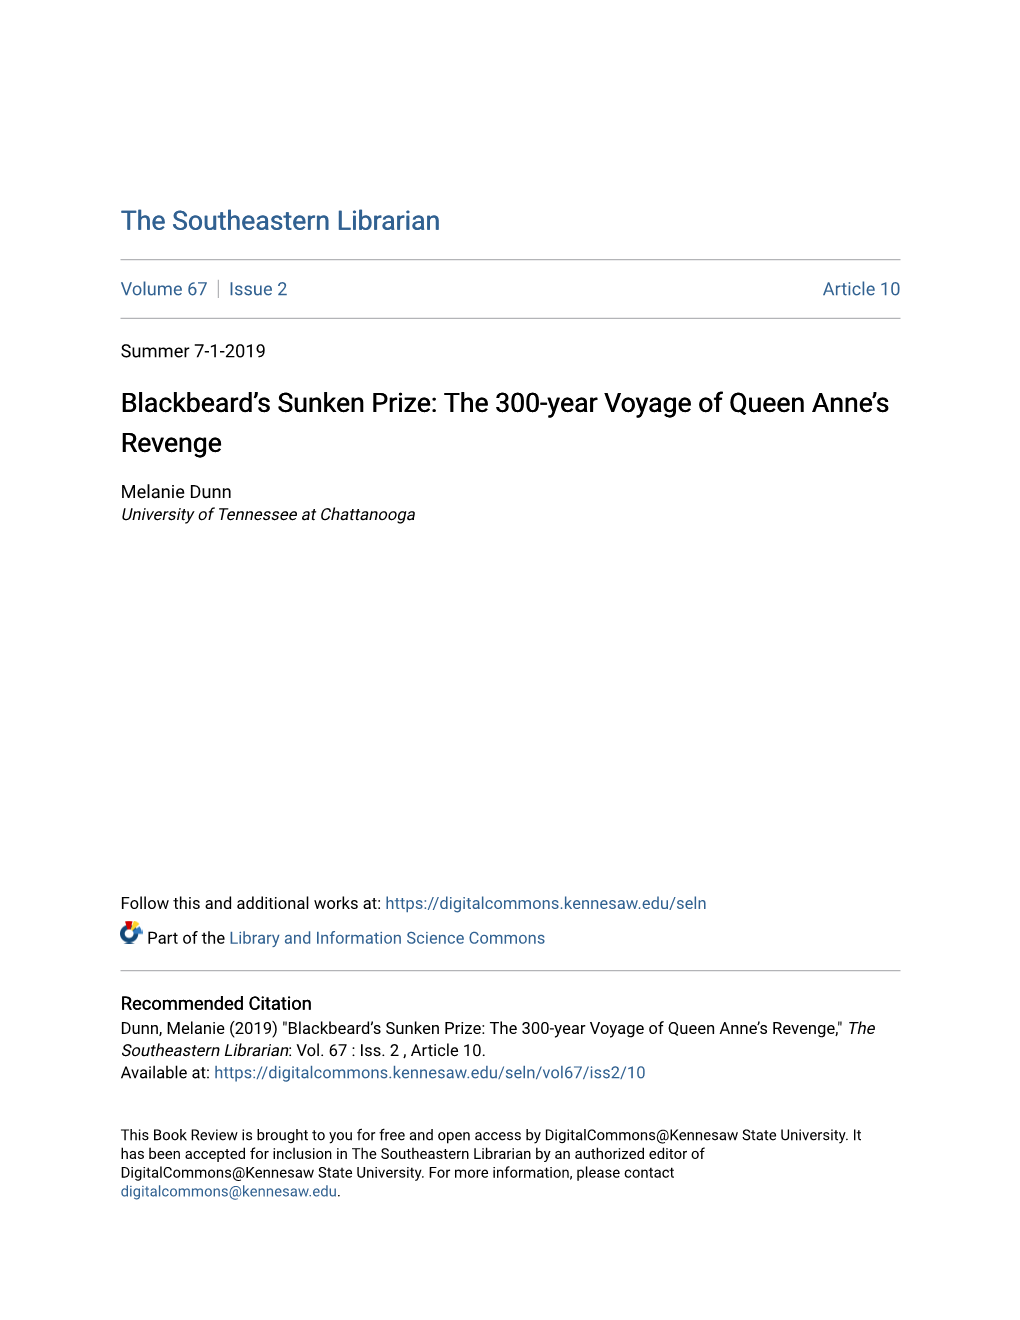 Blackbeard's Sunken Prize: the 300-Year Voyage of Queen Anne's